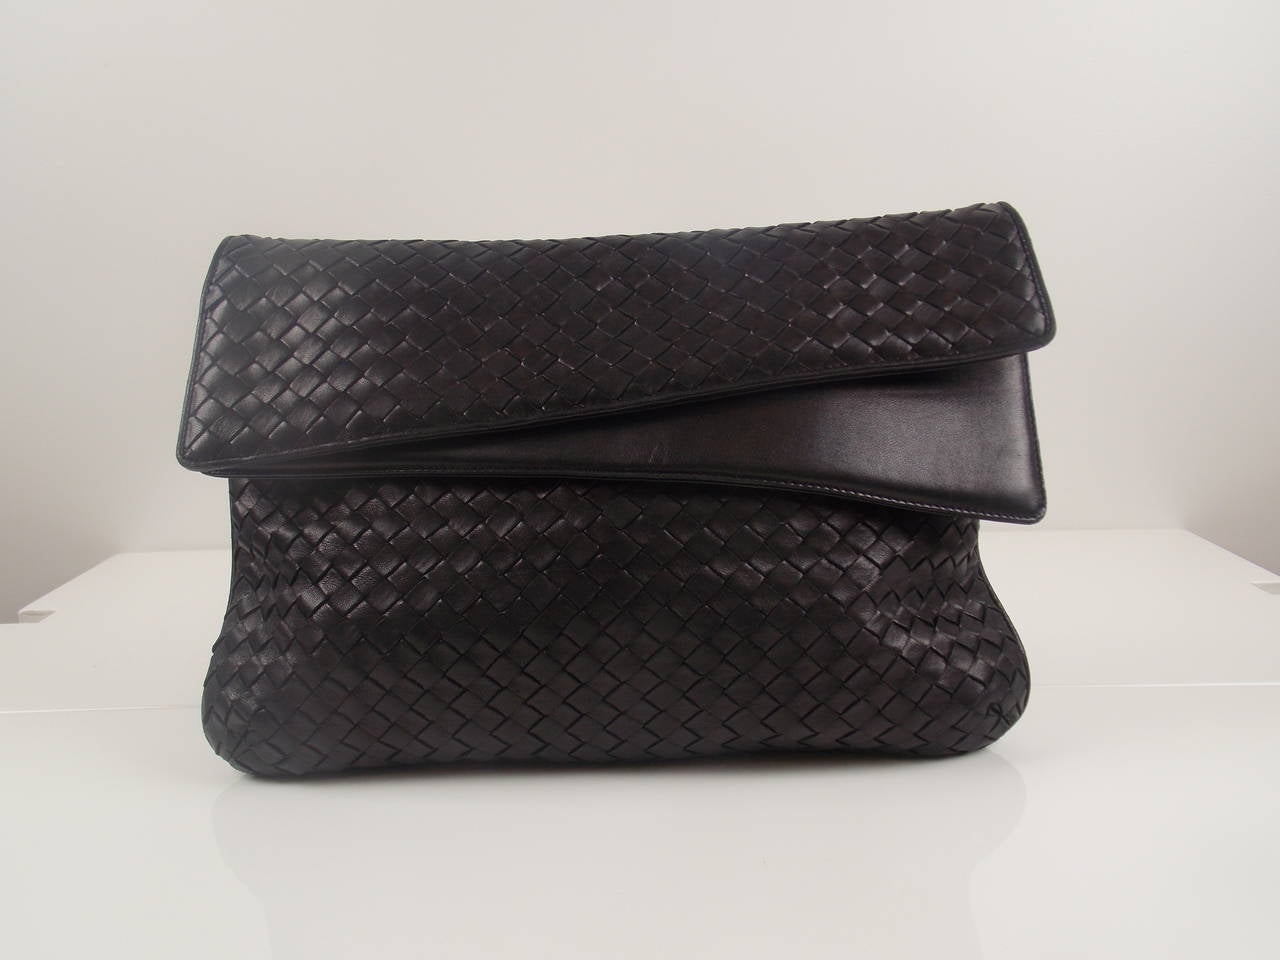 Super Chic Bottega Veneta woven double pocket clutch in black Leather.